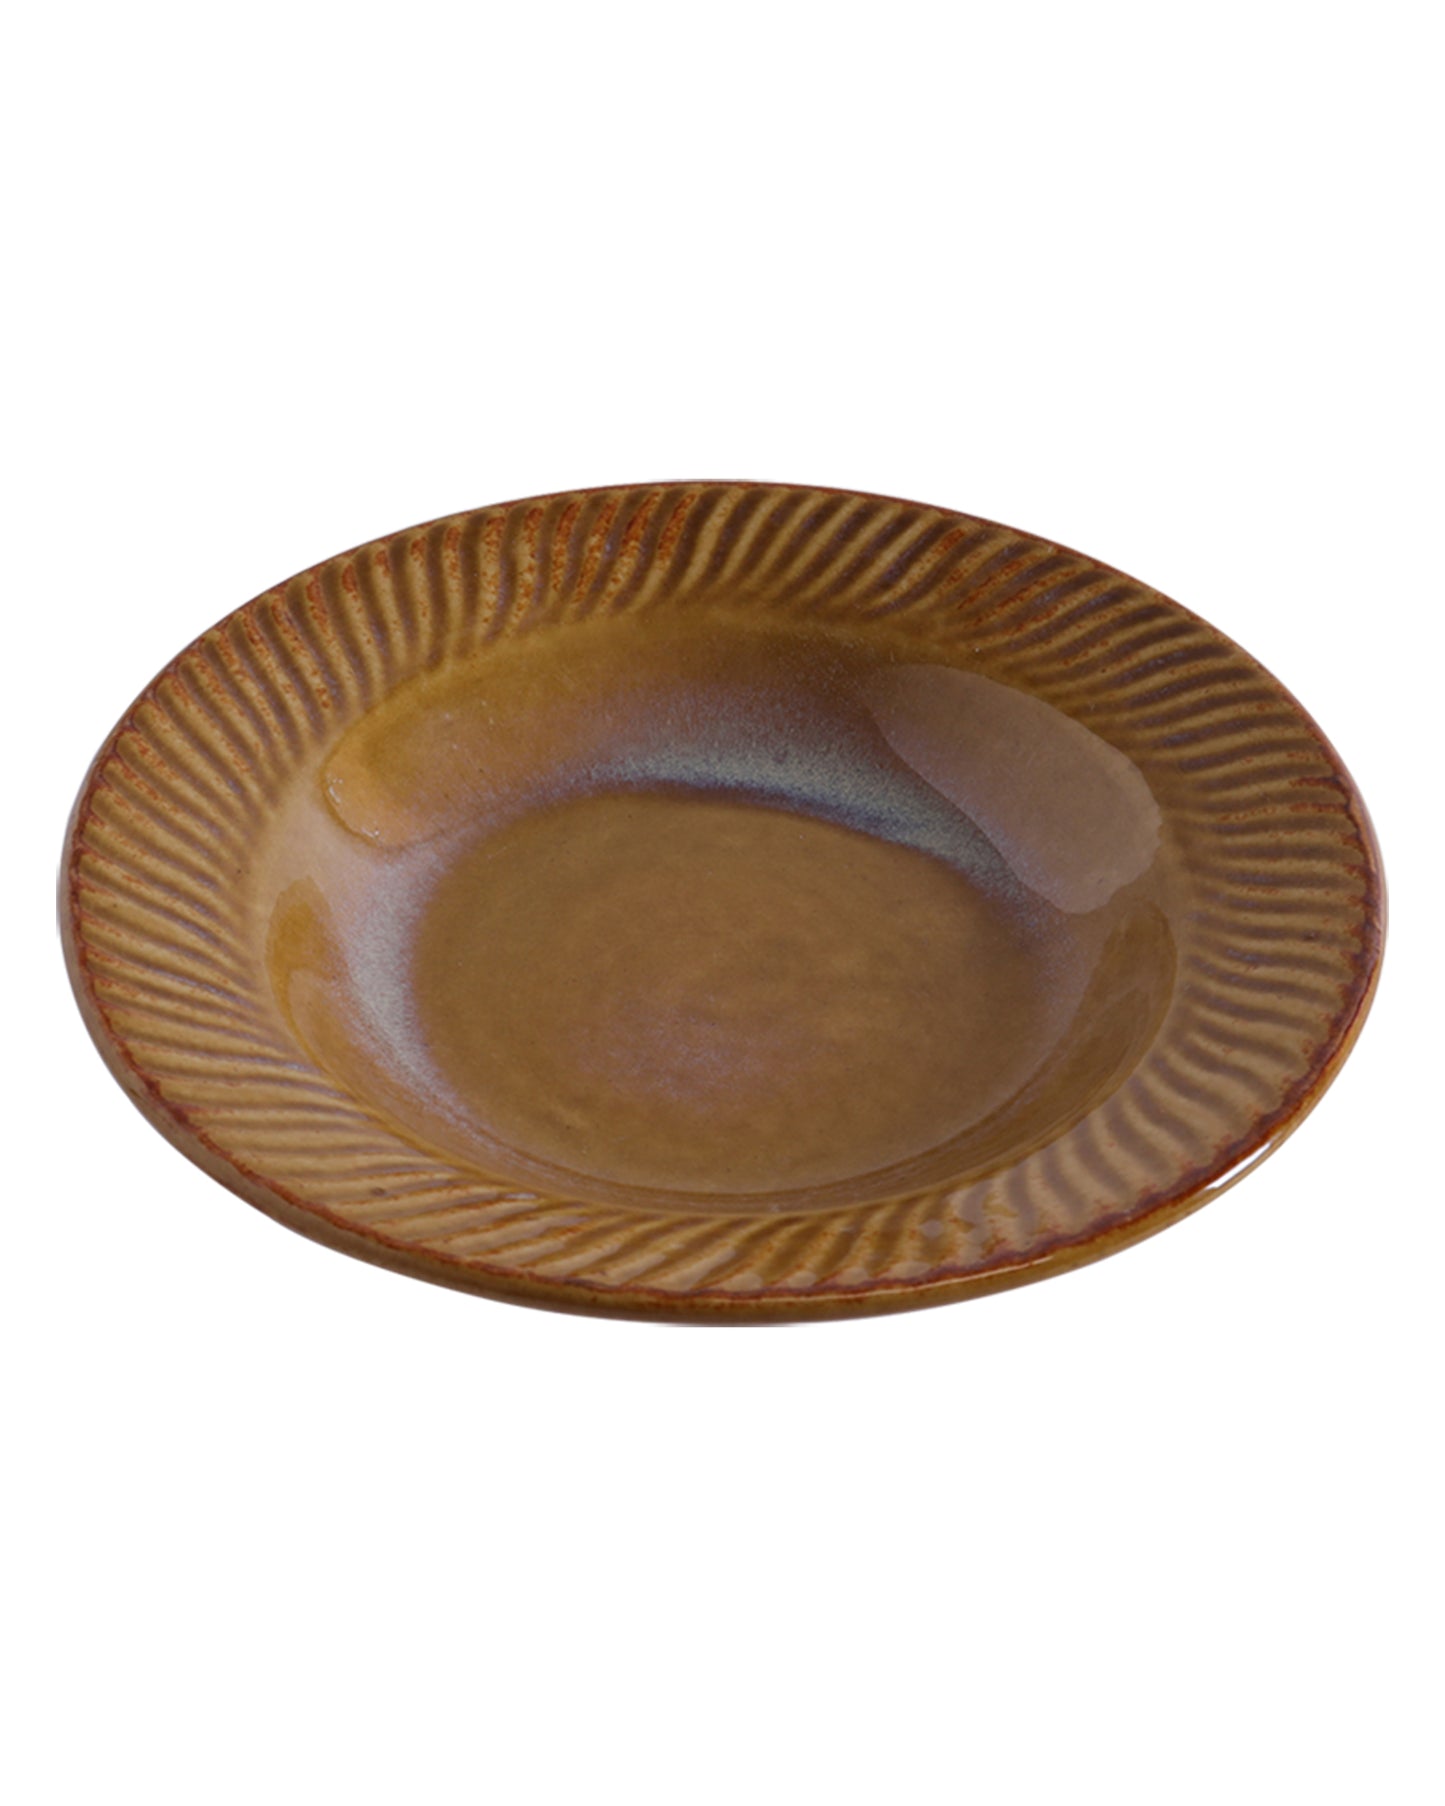 Kitchen Soup Pasta Plate, High Quality Stoneware Serving Platter | Dishwasher & Microwave Safe, Large